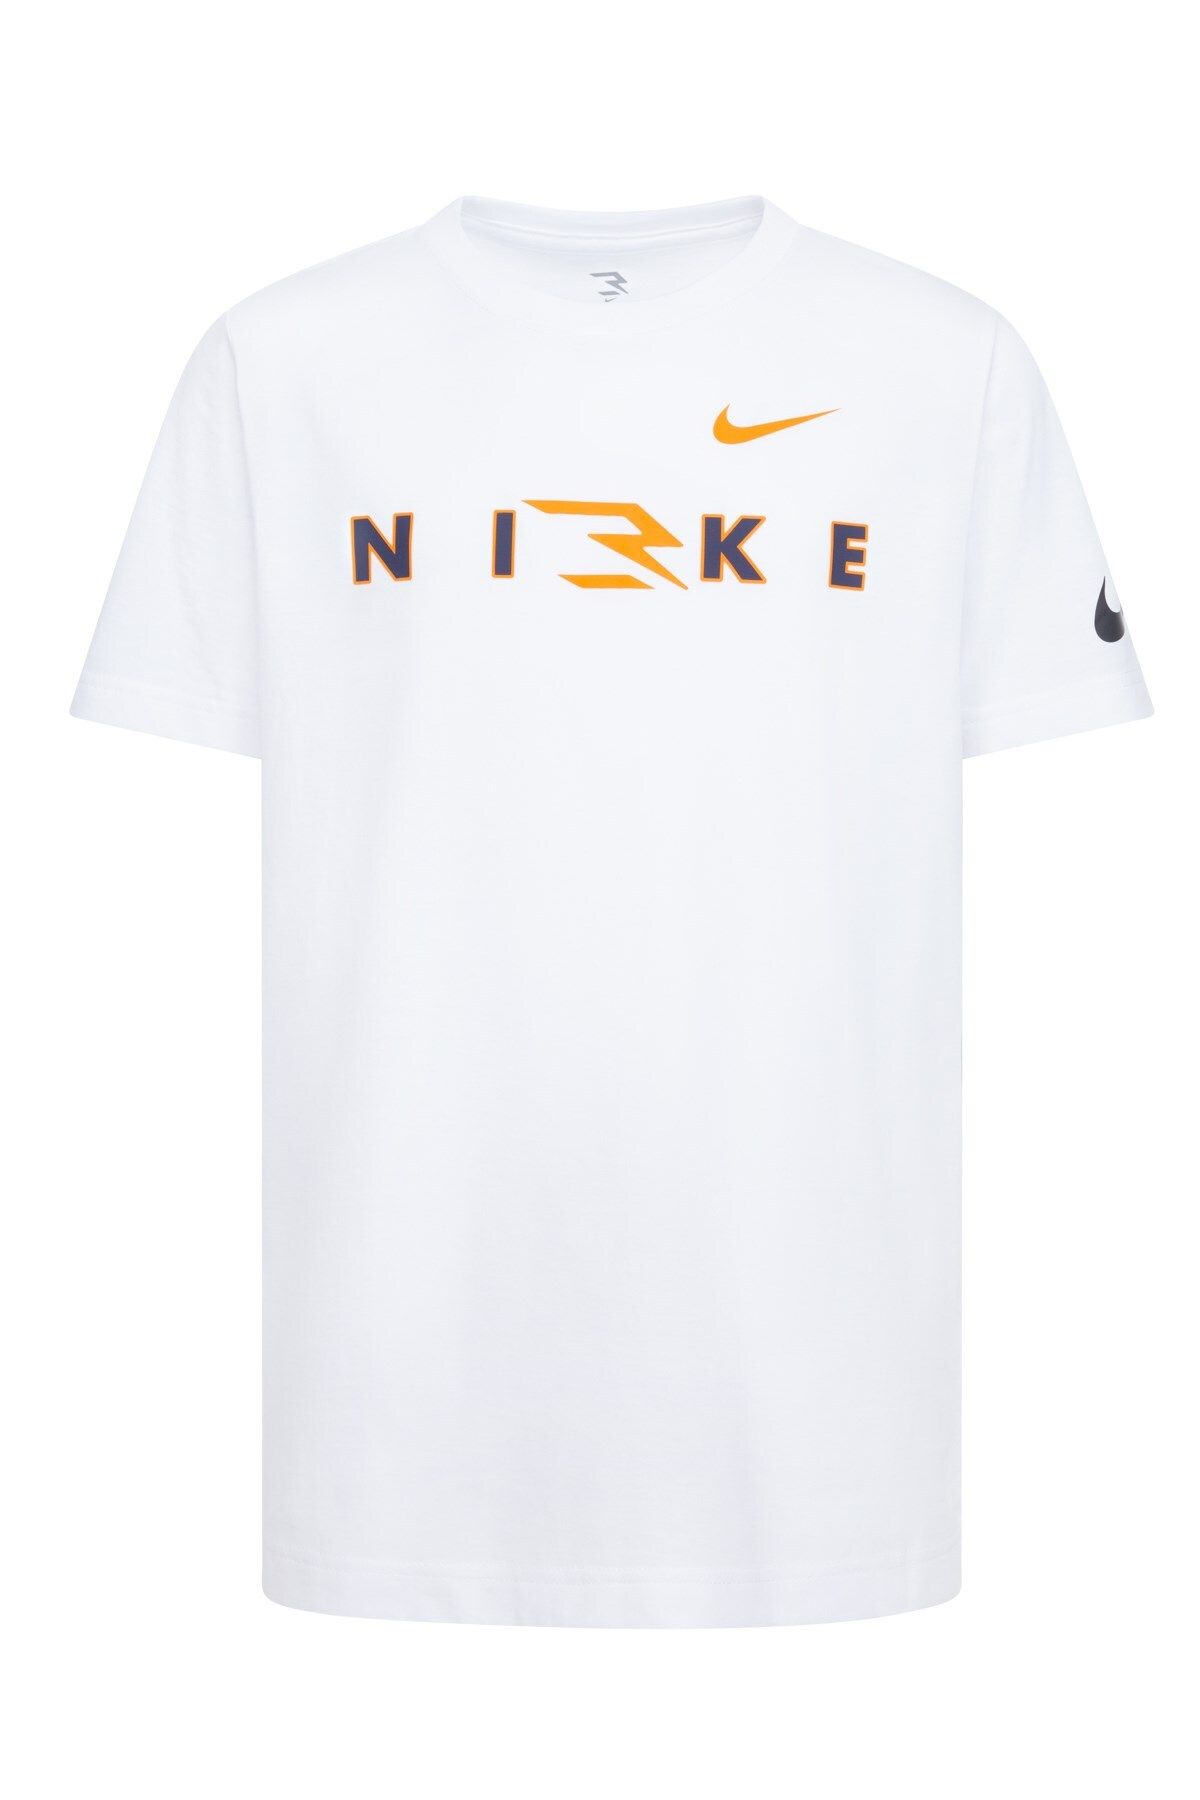 Nike Rwb Çocuk Tişört 9Q0573-001